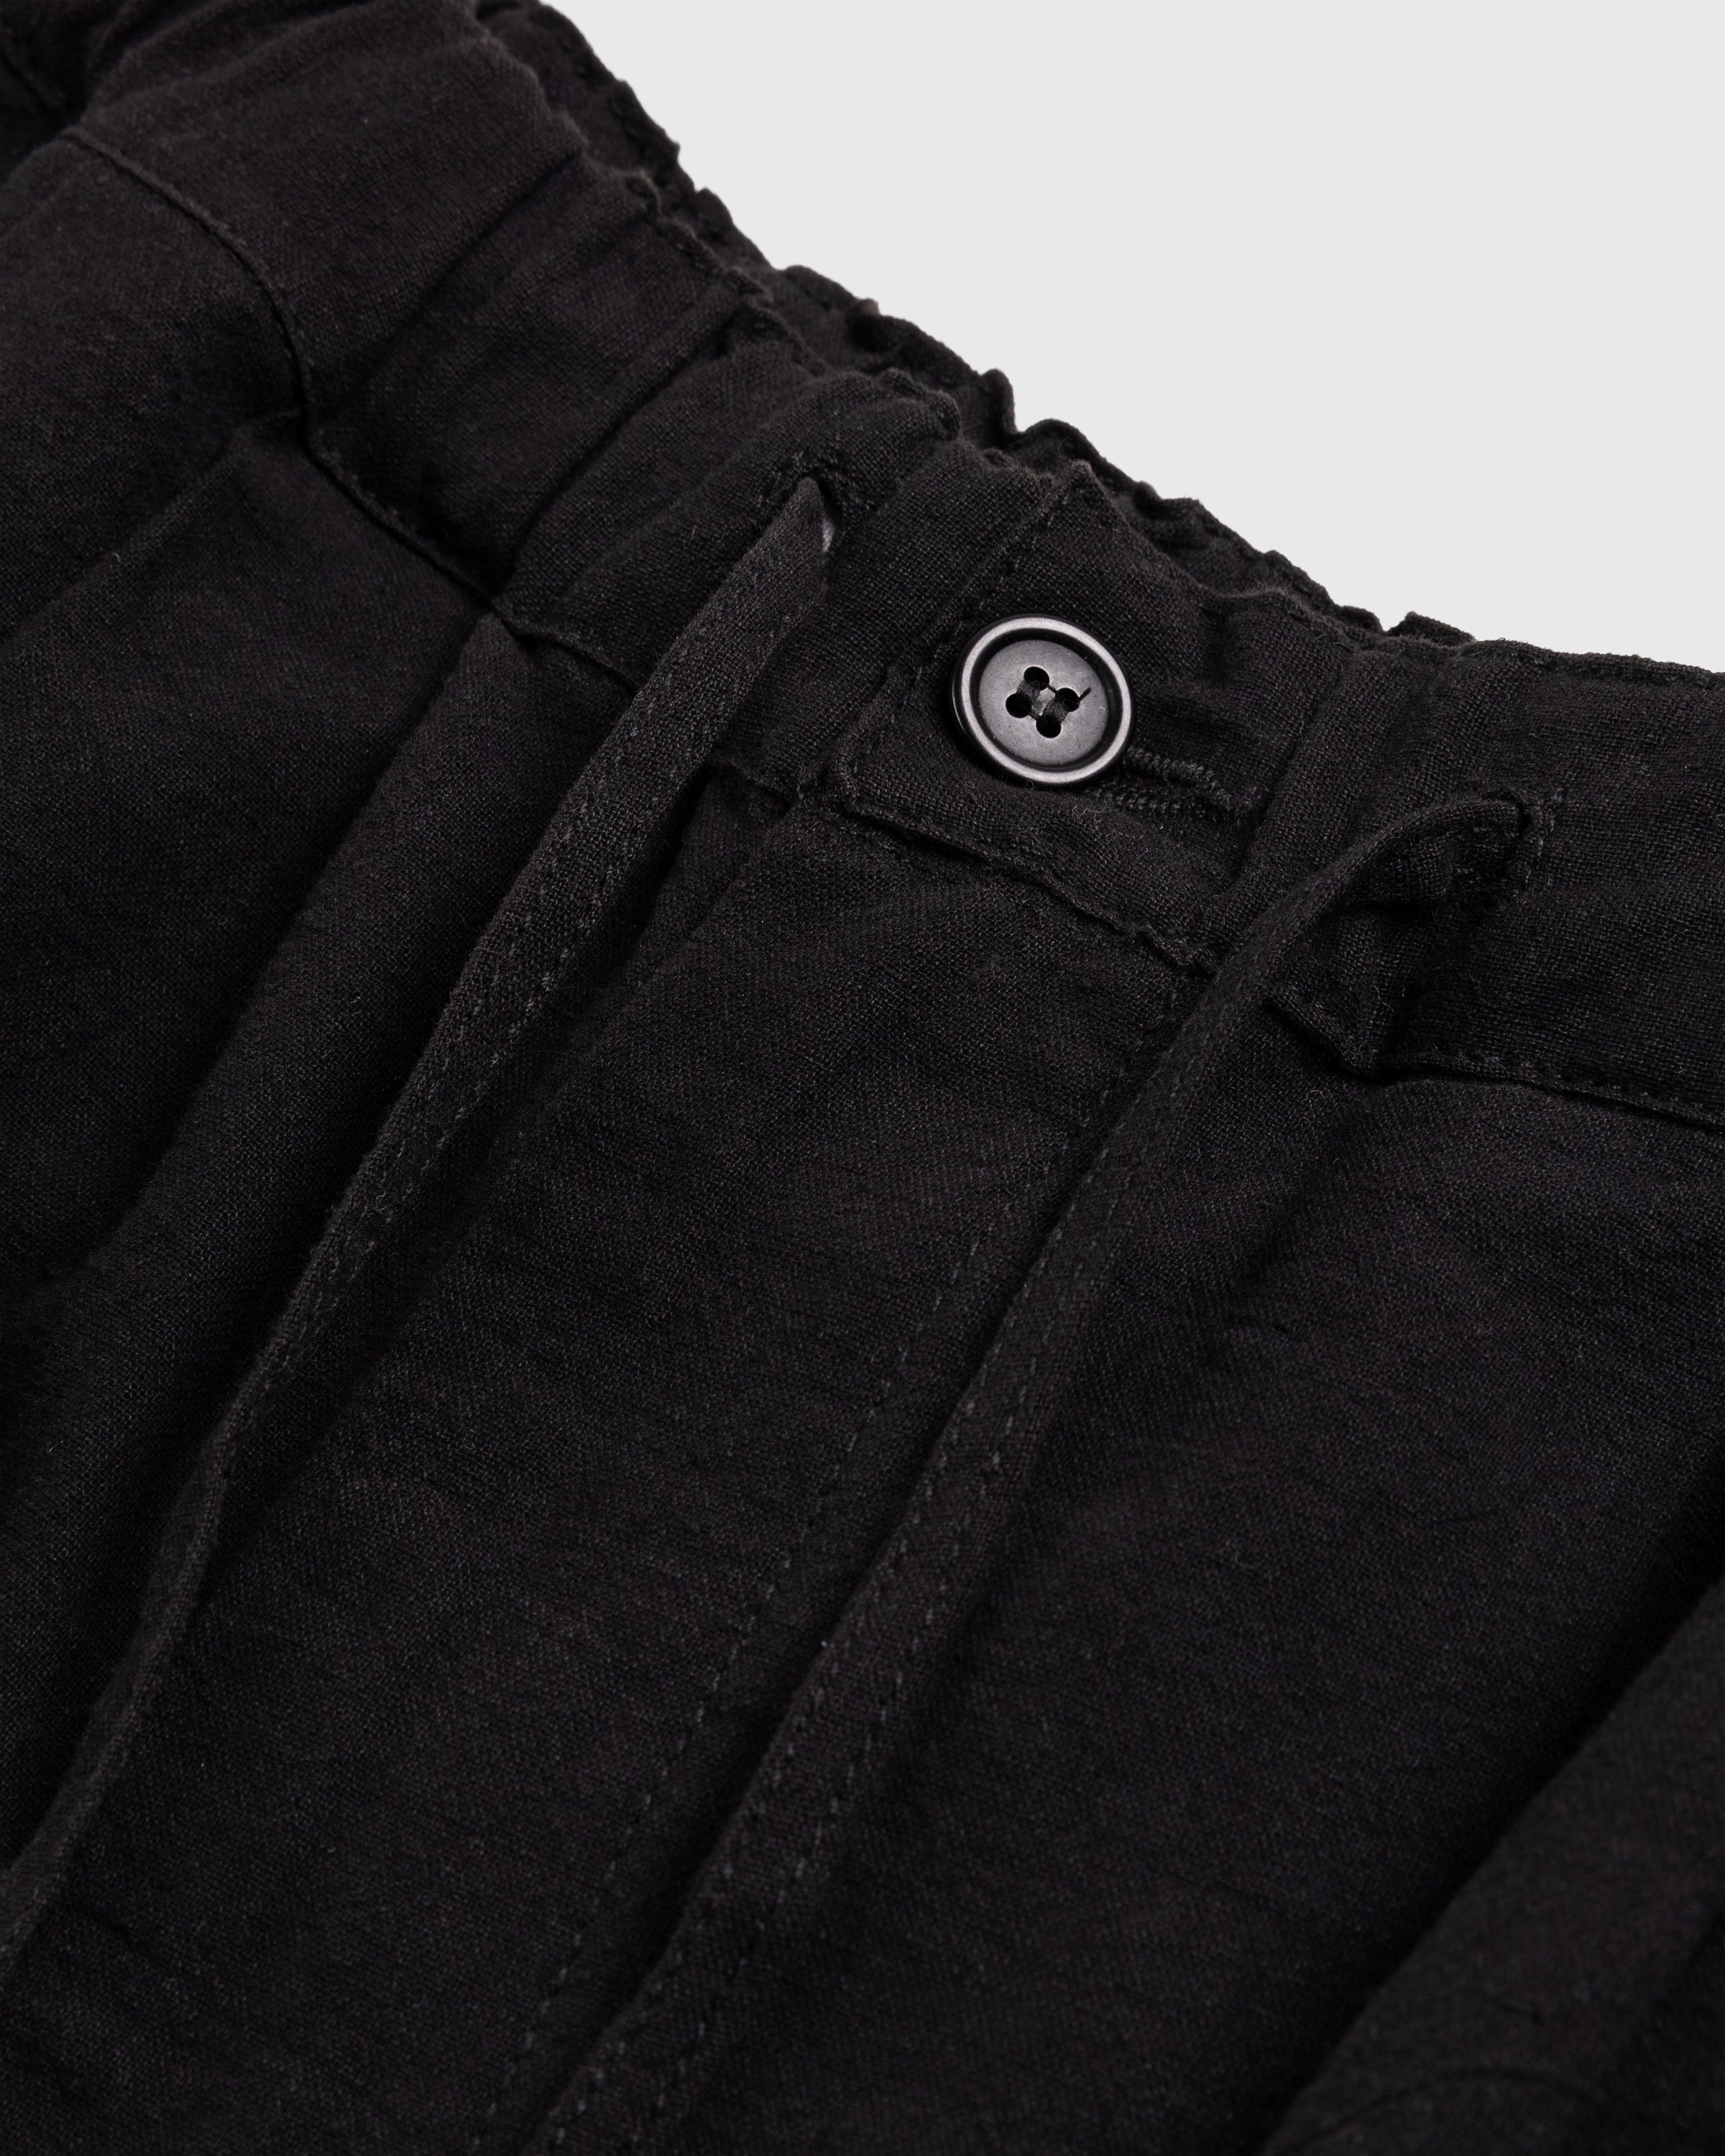 Story mfg. – Bridge Shorts Sampler Black - Shorts - Black - Image 4